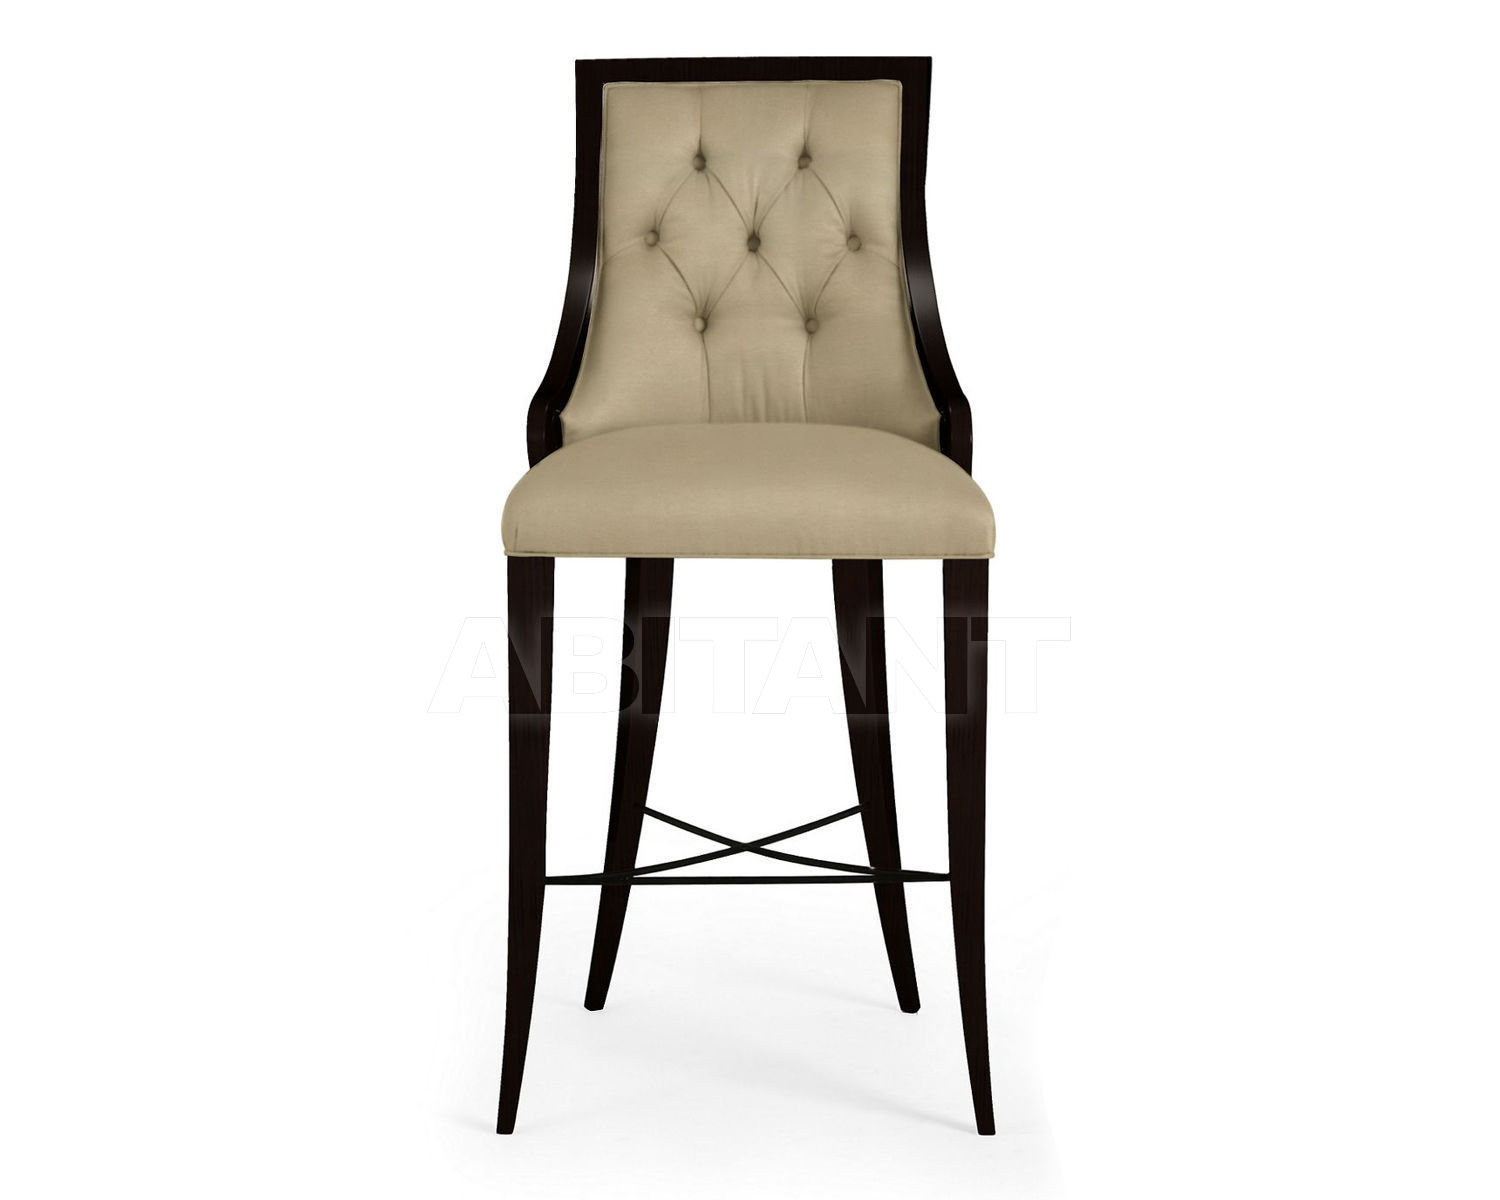 Buy Bar chair Megeve Christopher Guy 2014 60-0026-CC Cameo